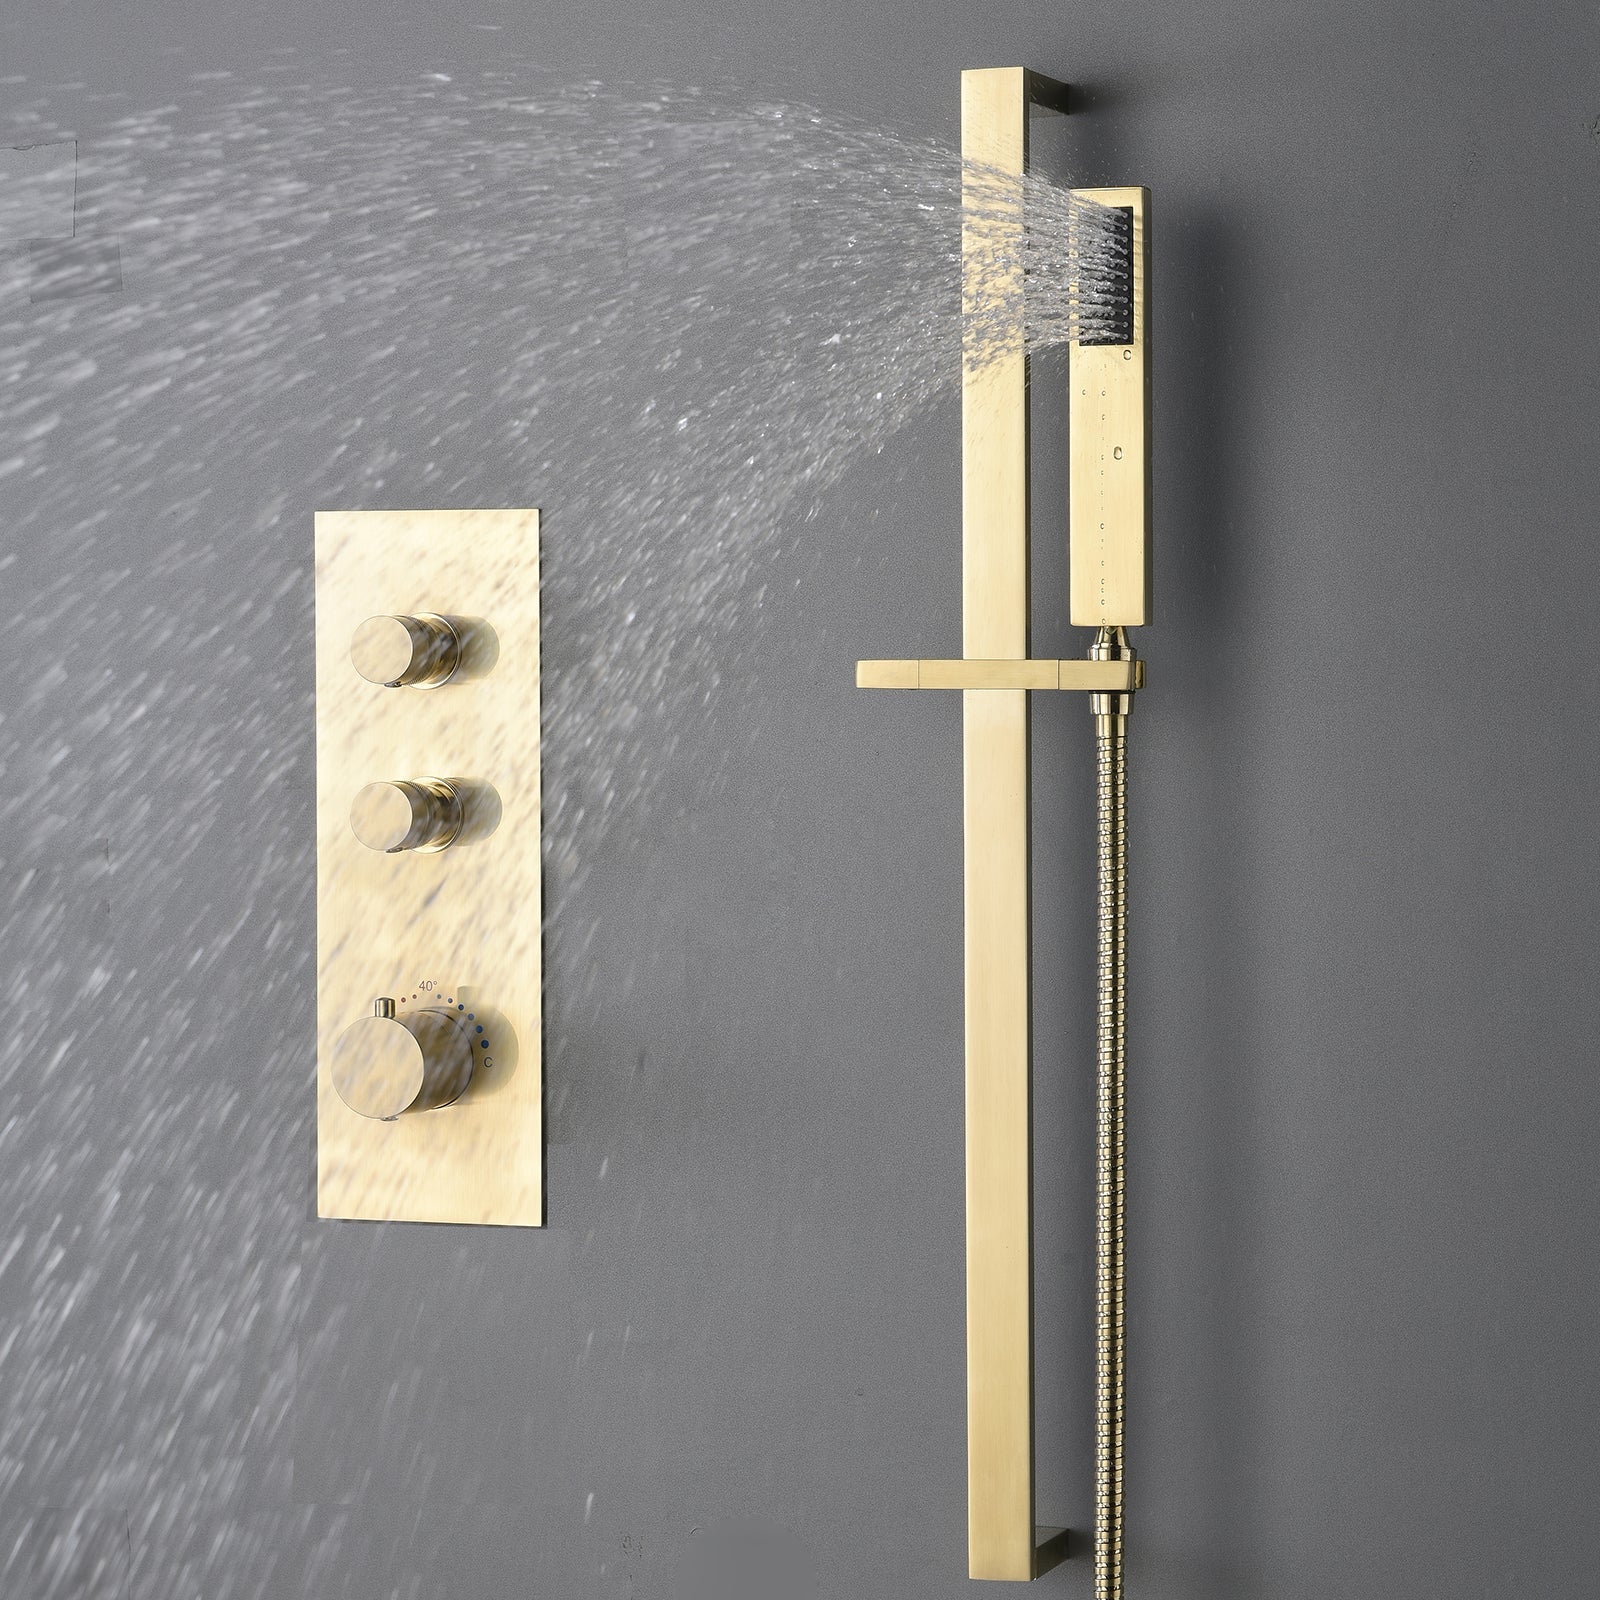 Vionel 10 In Thermostatic Shower System Handshower in Brushed Gold